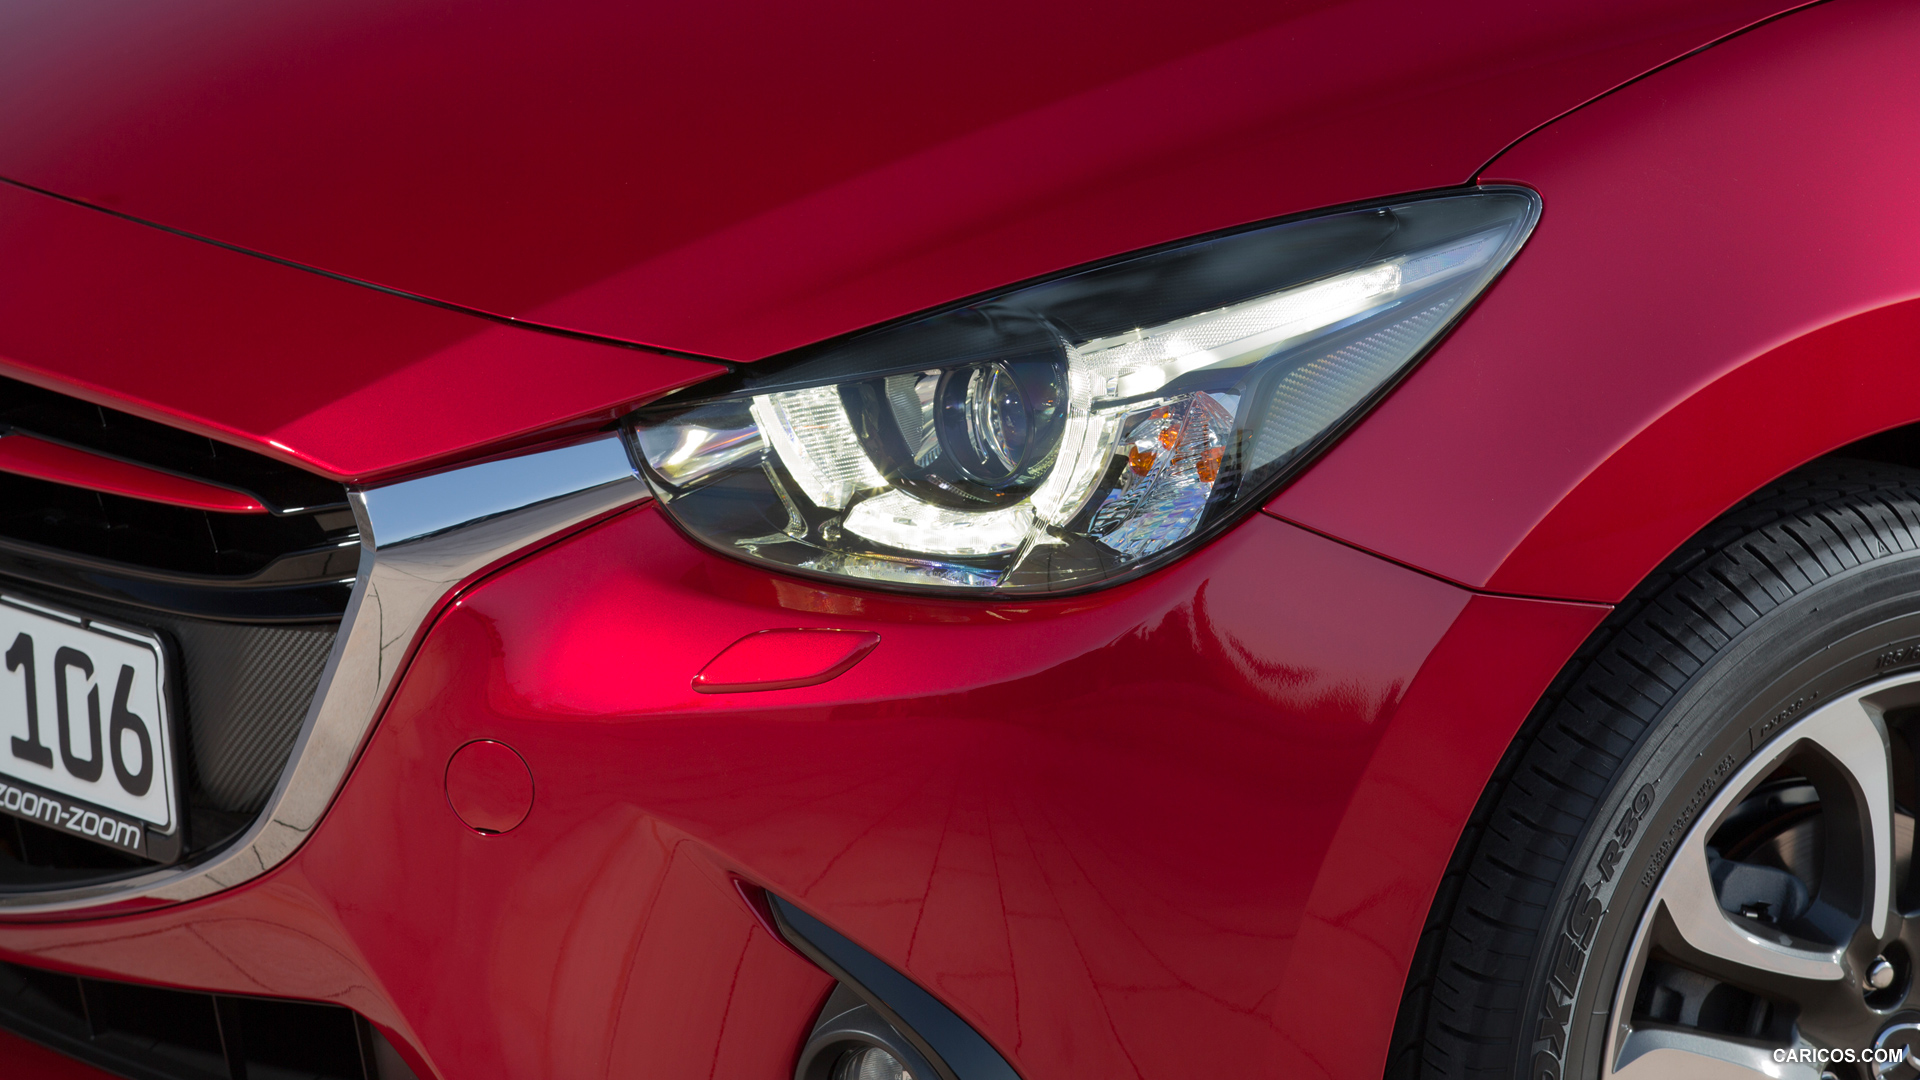 2016 Mazda2  - Headlight, #156 of 340